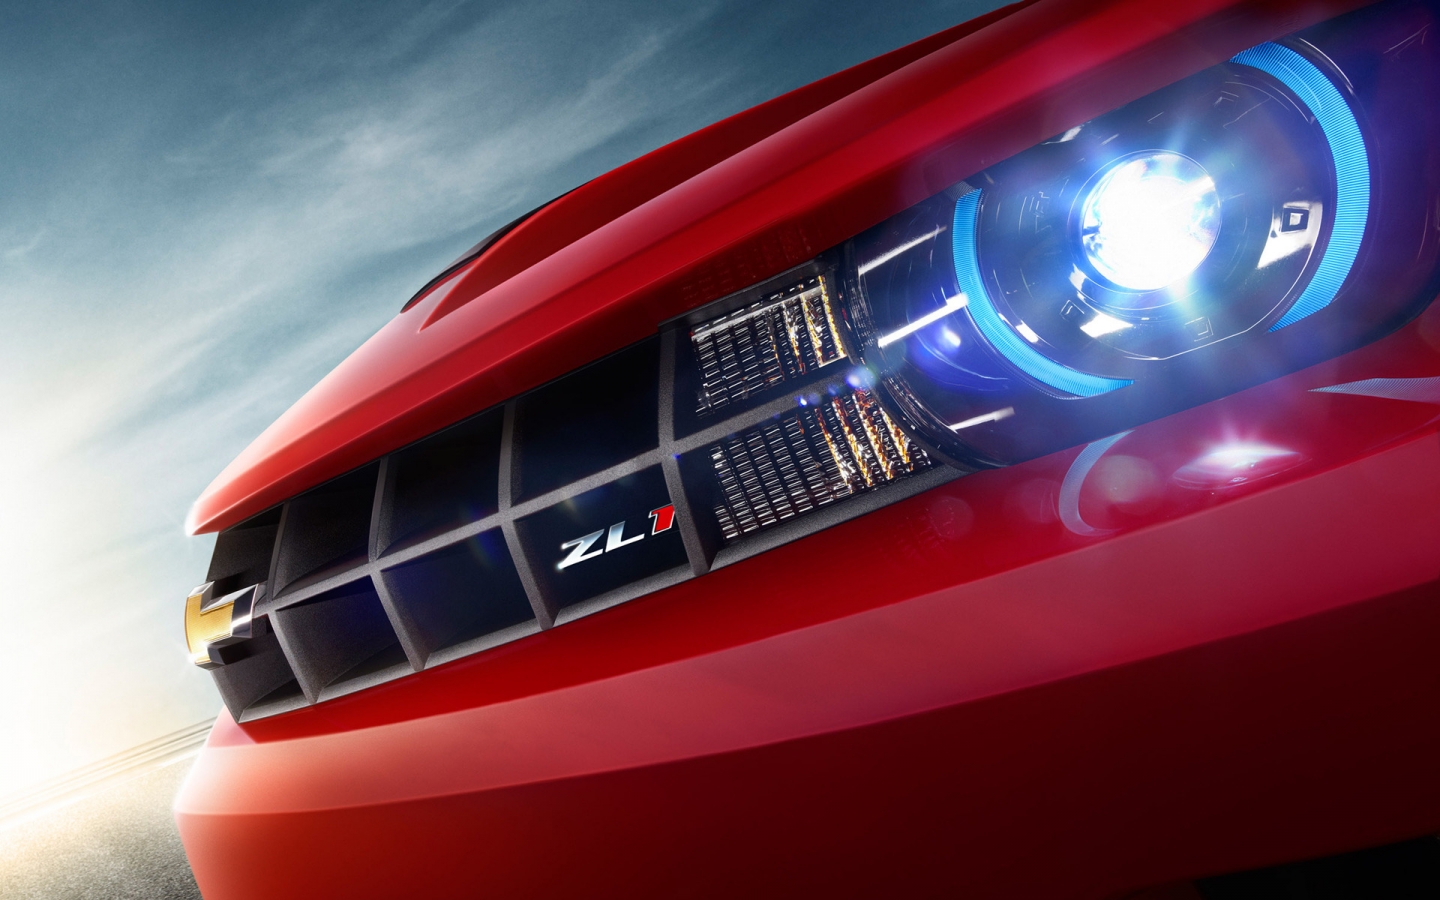 2012 Chevy Camaro ZL1 Headlight for 1440 x 900 widescreen resolution